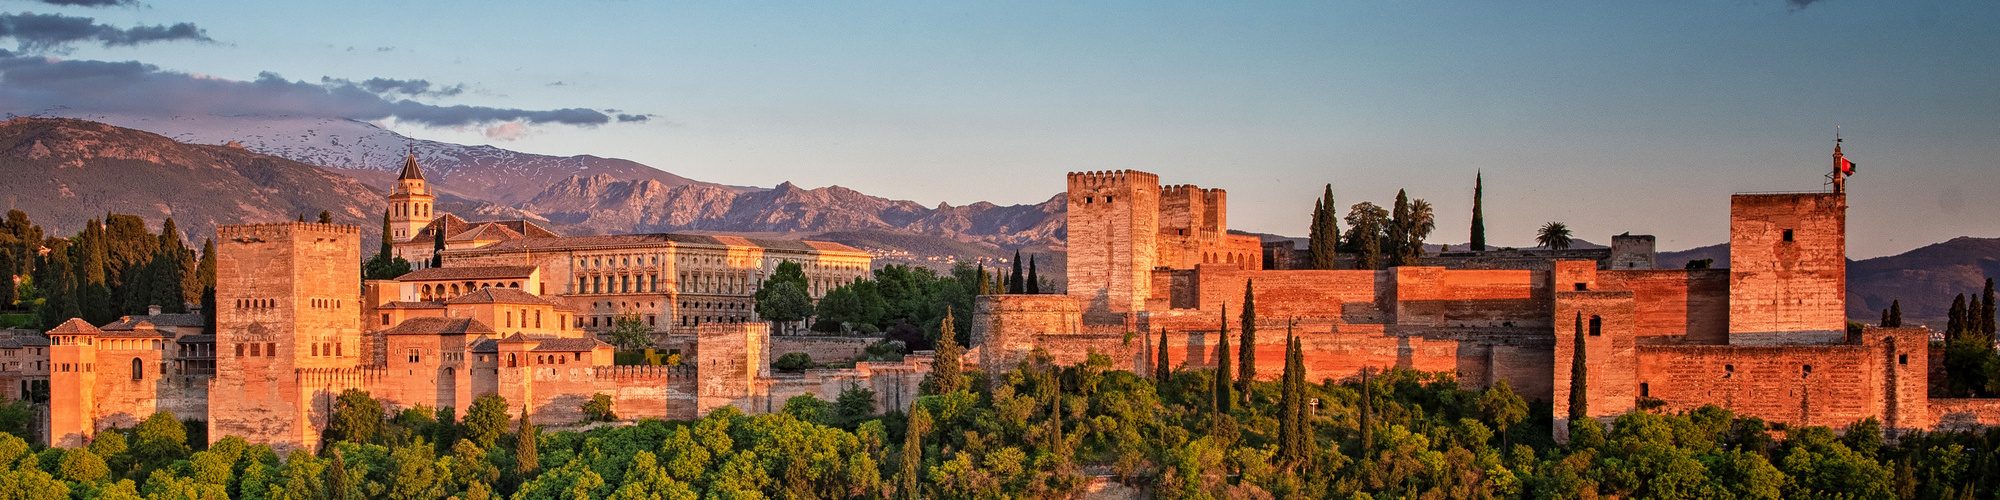 Foto de la vista panorámica de la Alhambra de Granada